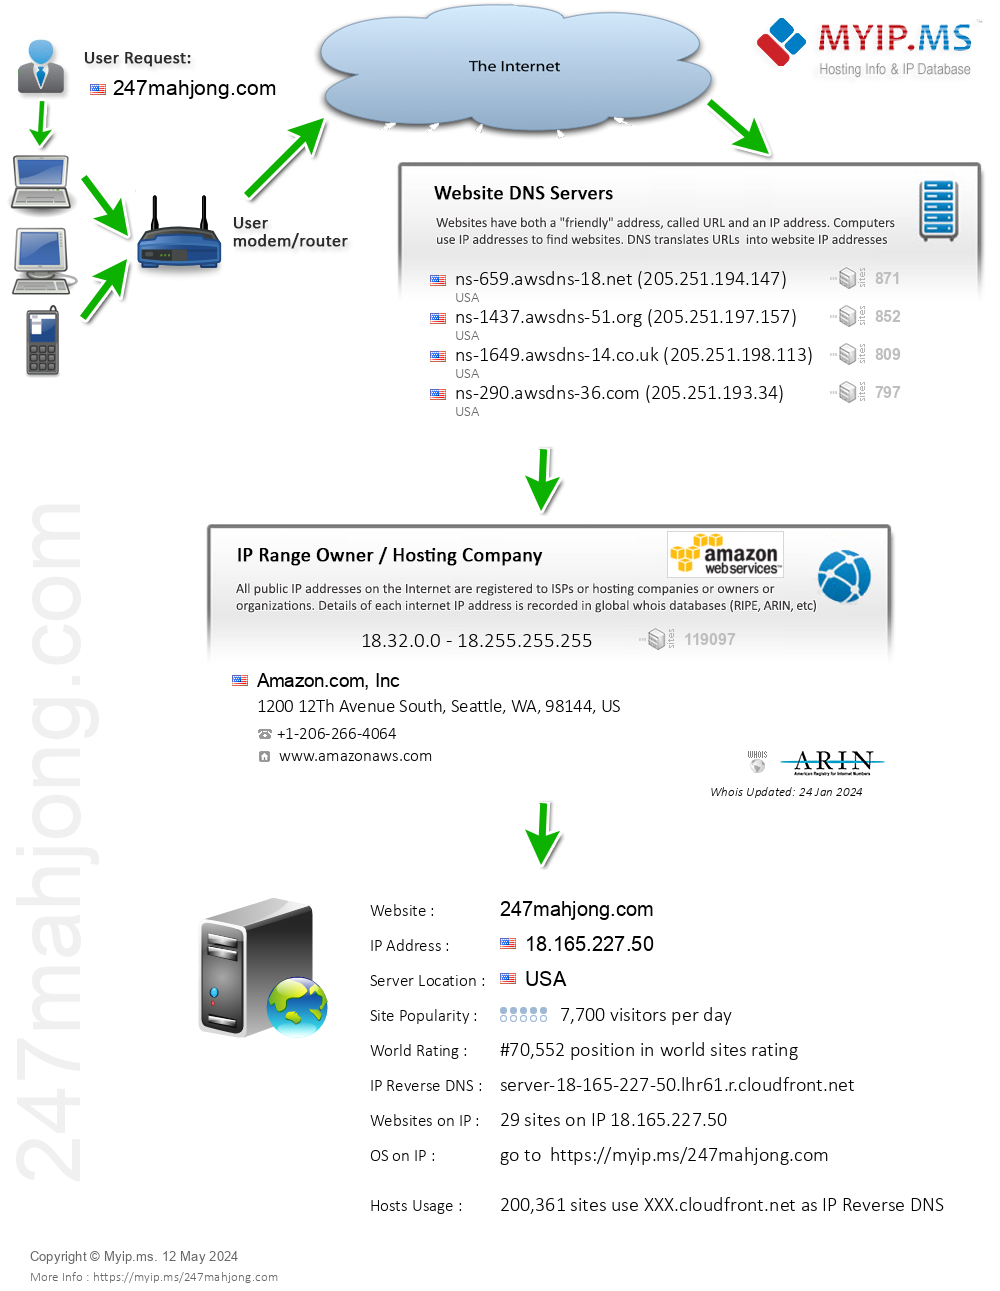 247mahjong.com - Website Hosting Visual IP Diagram